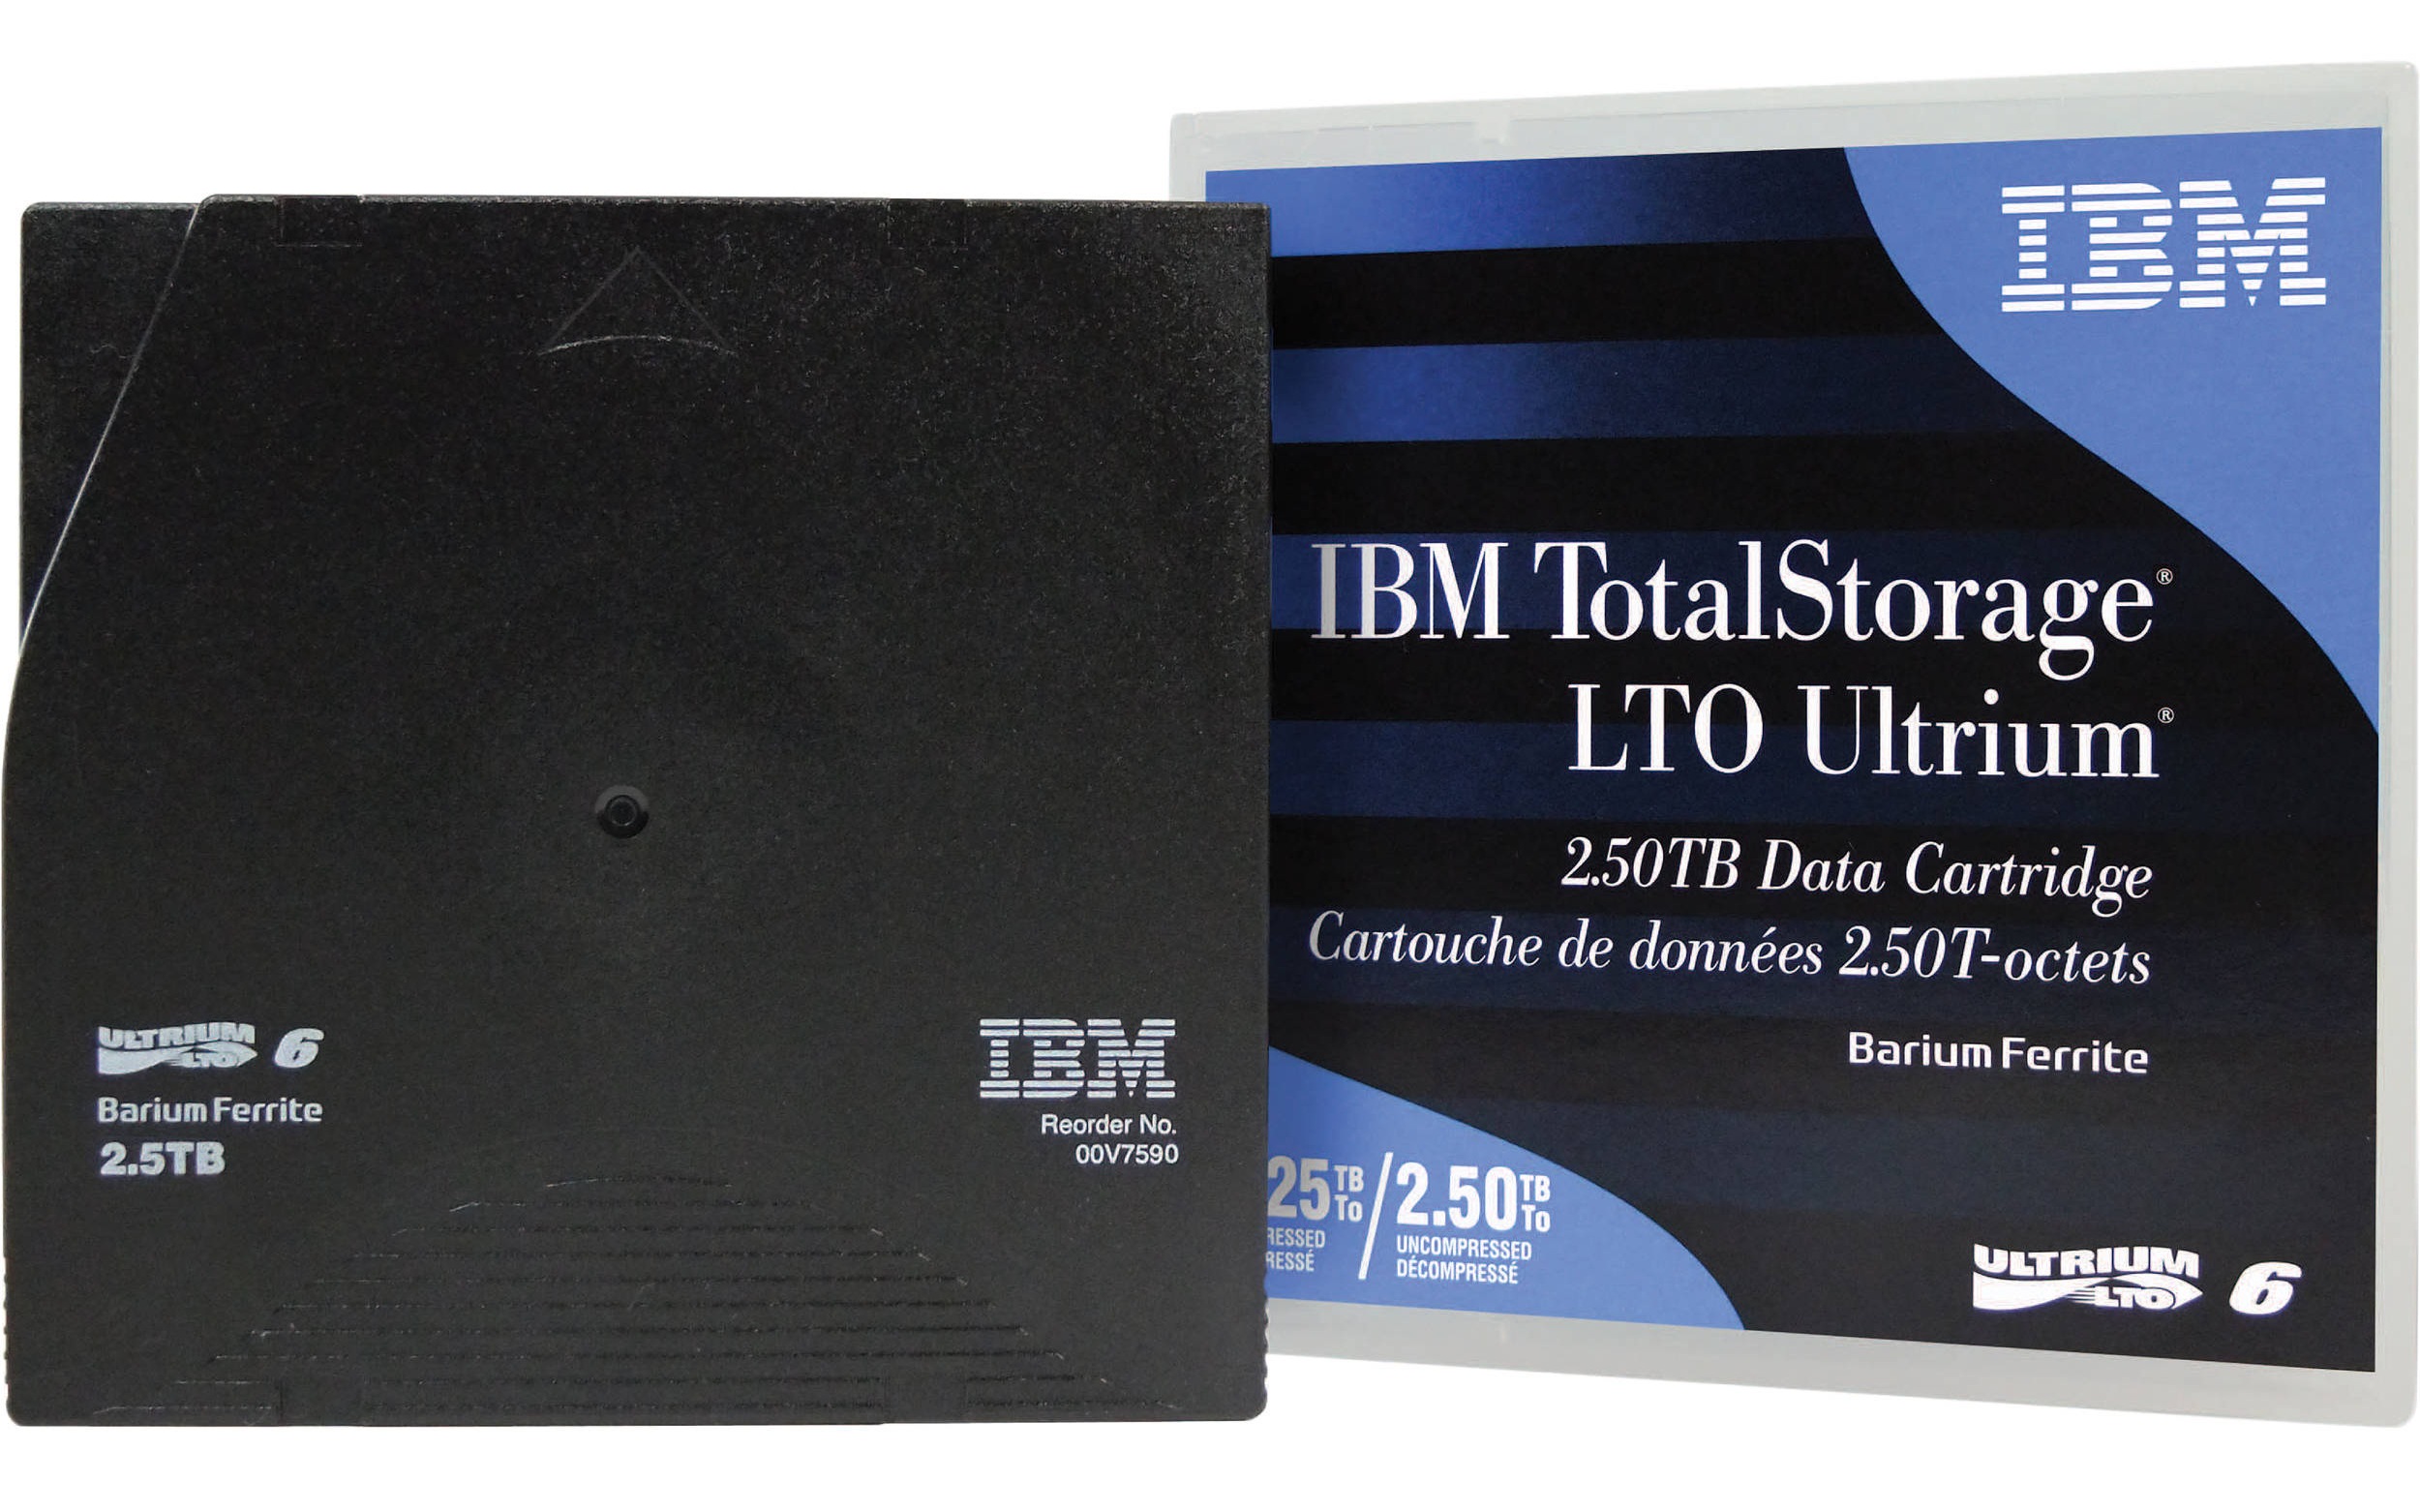 IBM LTO Ultrium Model 452 представила неинициализированные картриджи M8